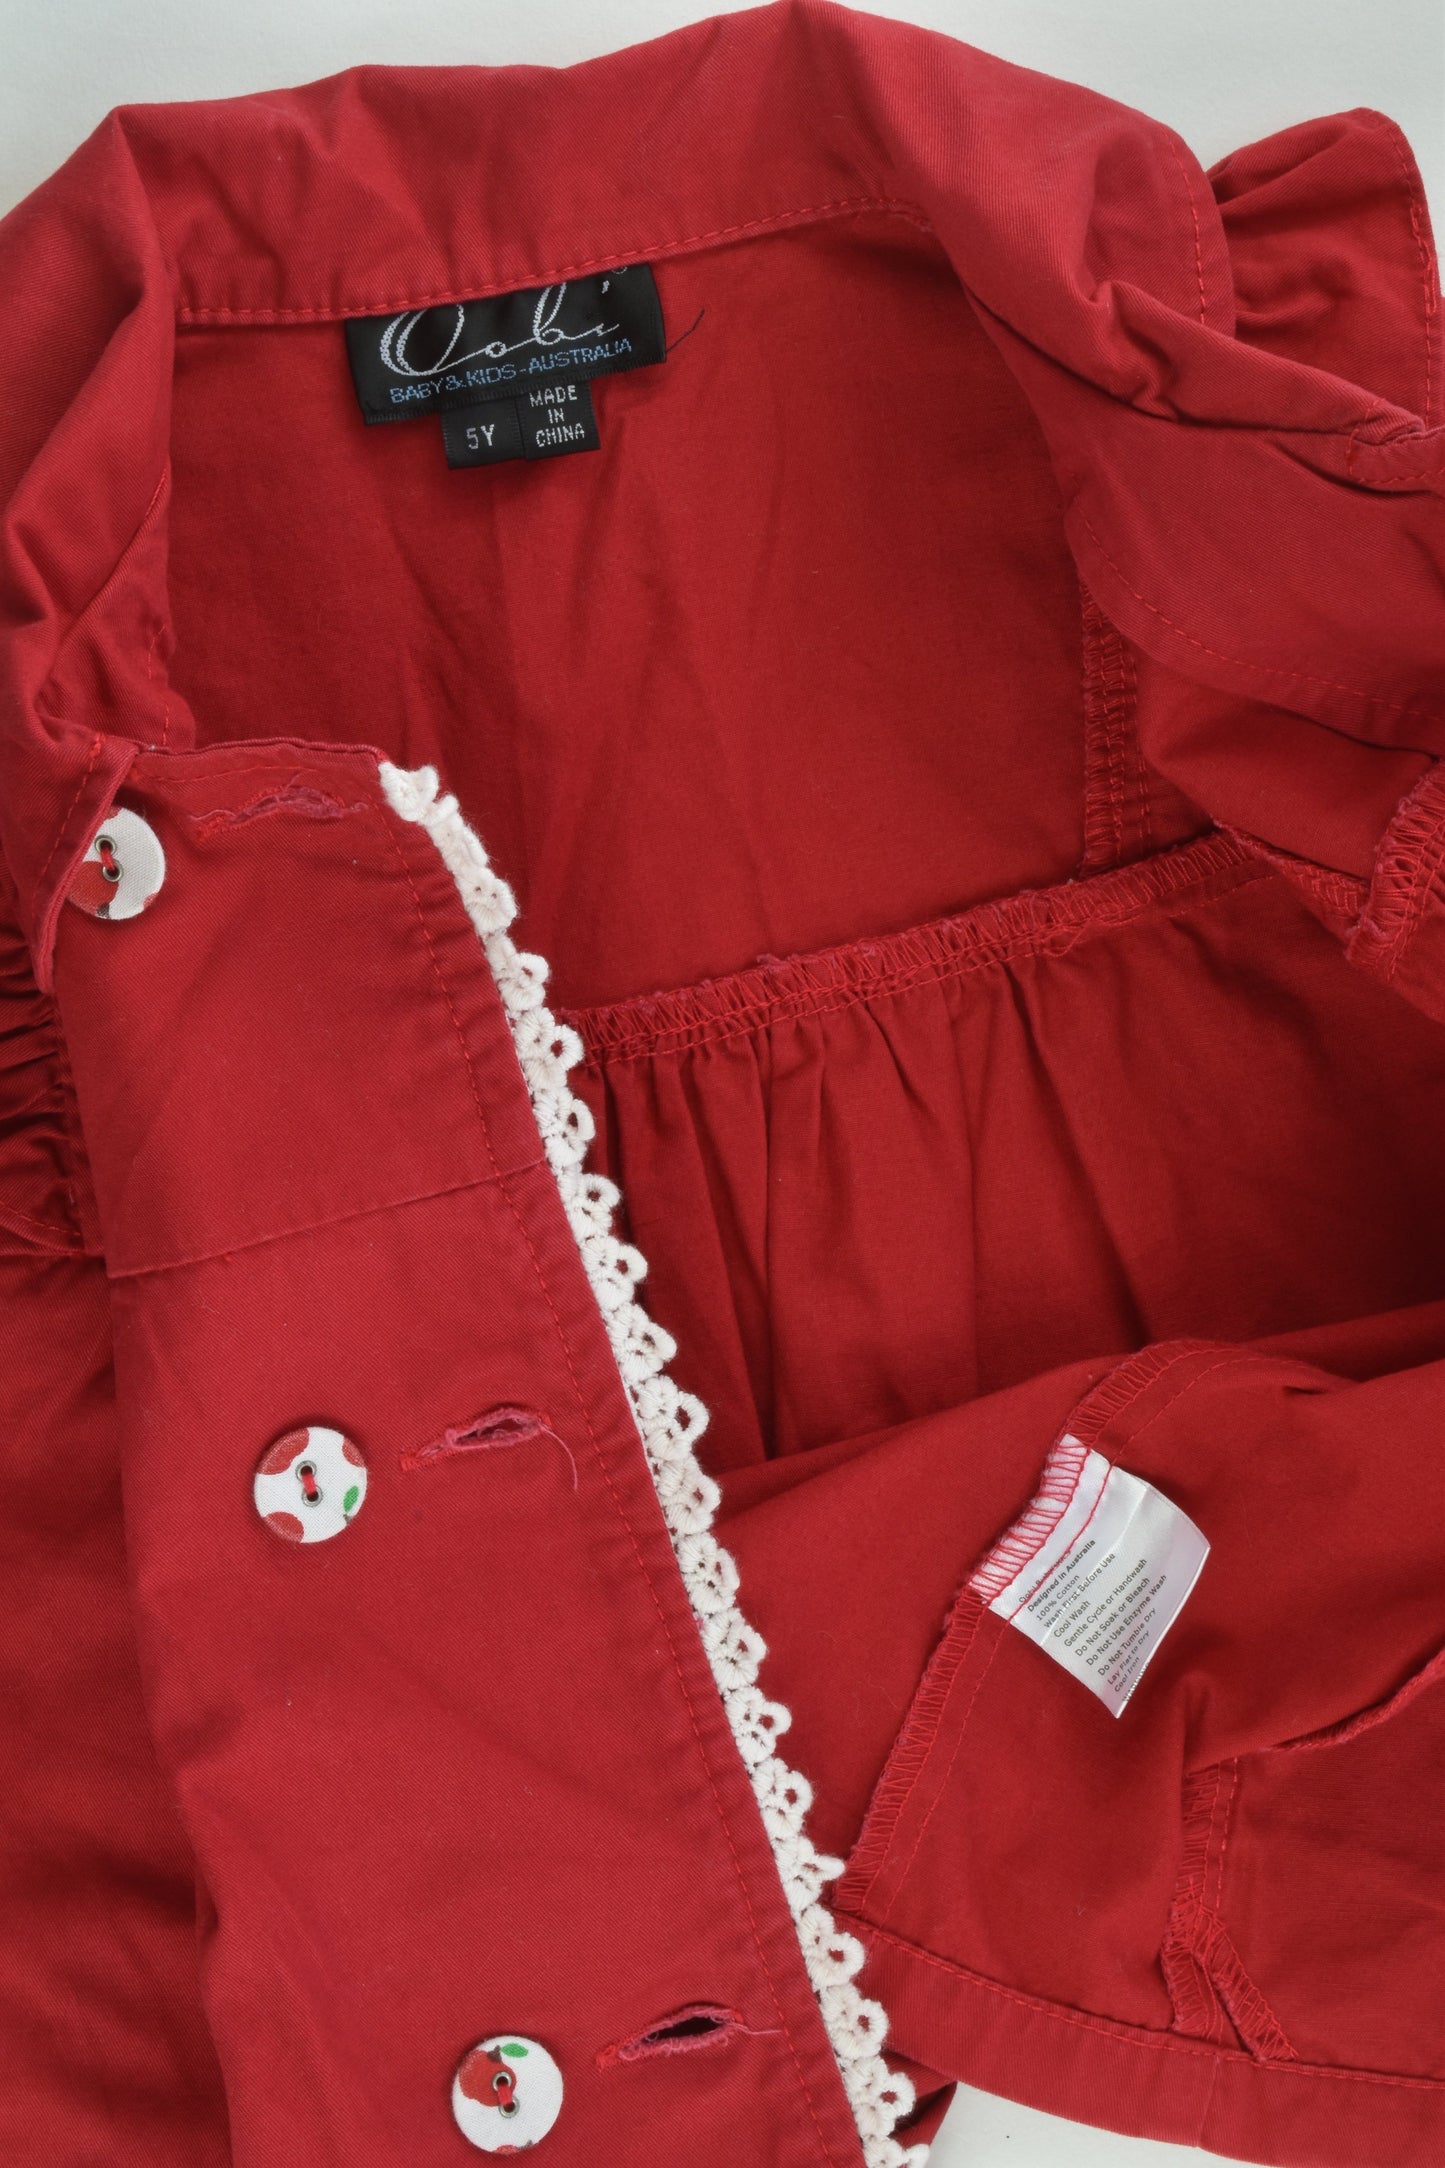 Oobi Australia Size 5 Red Jacket